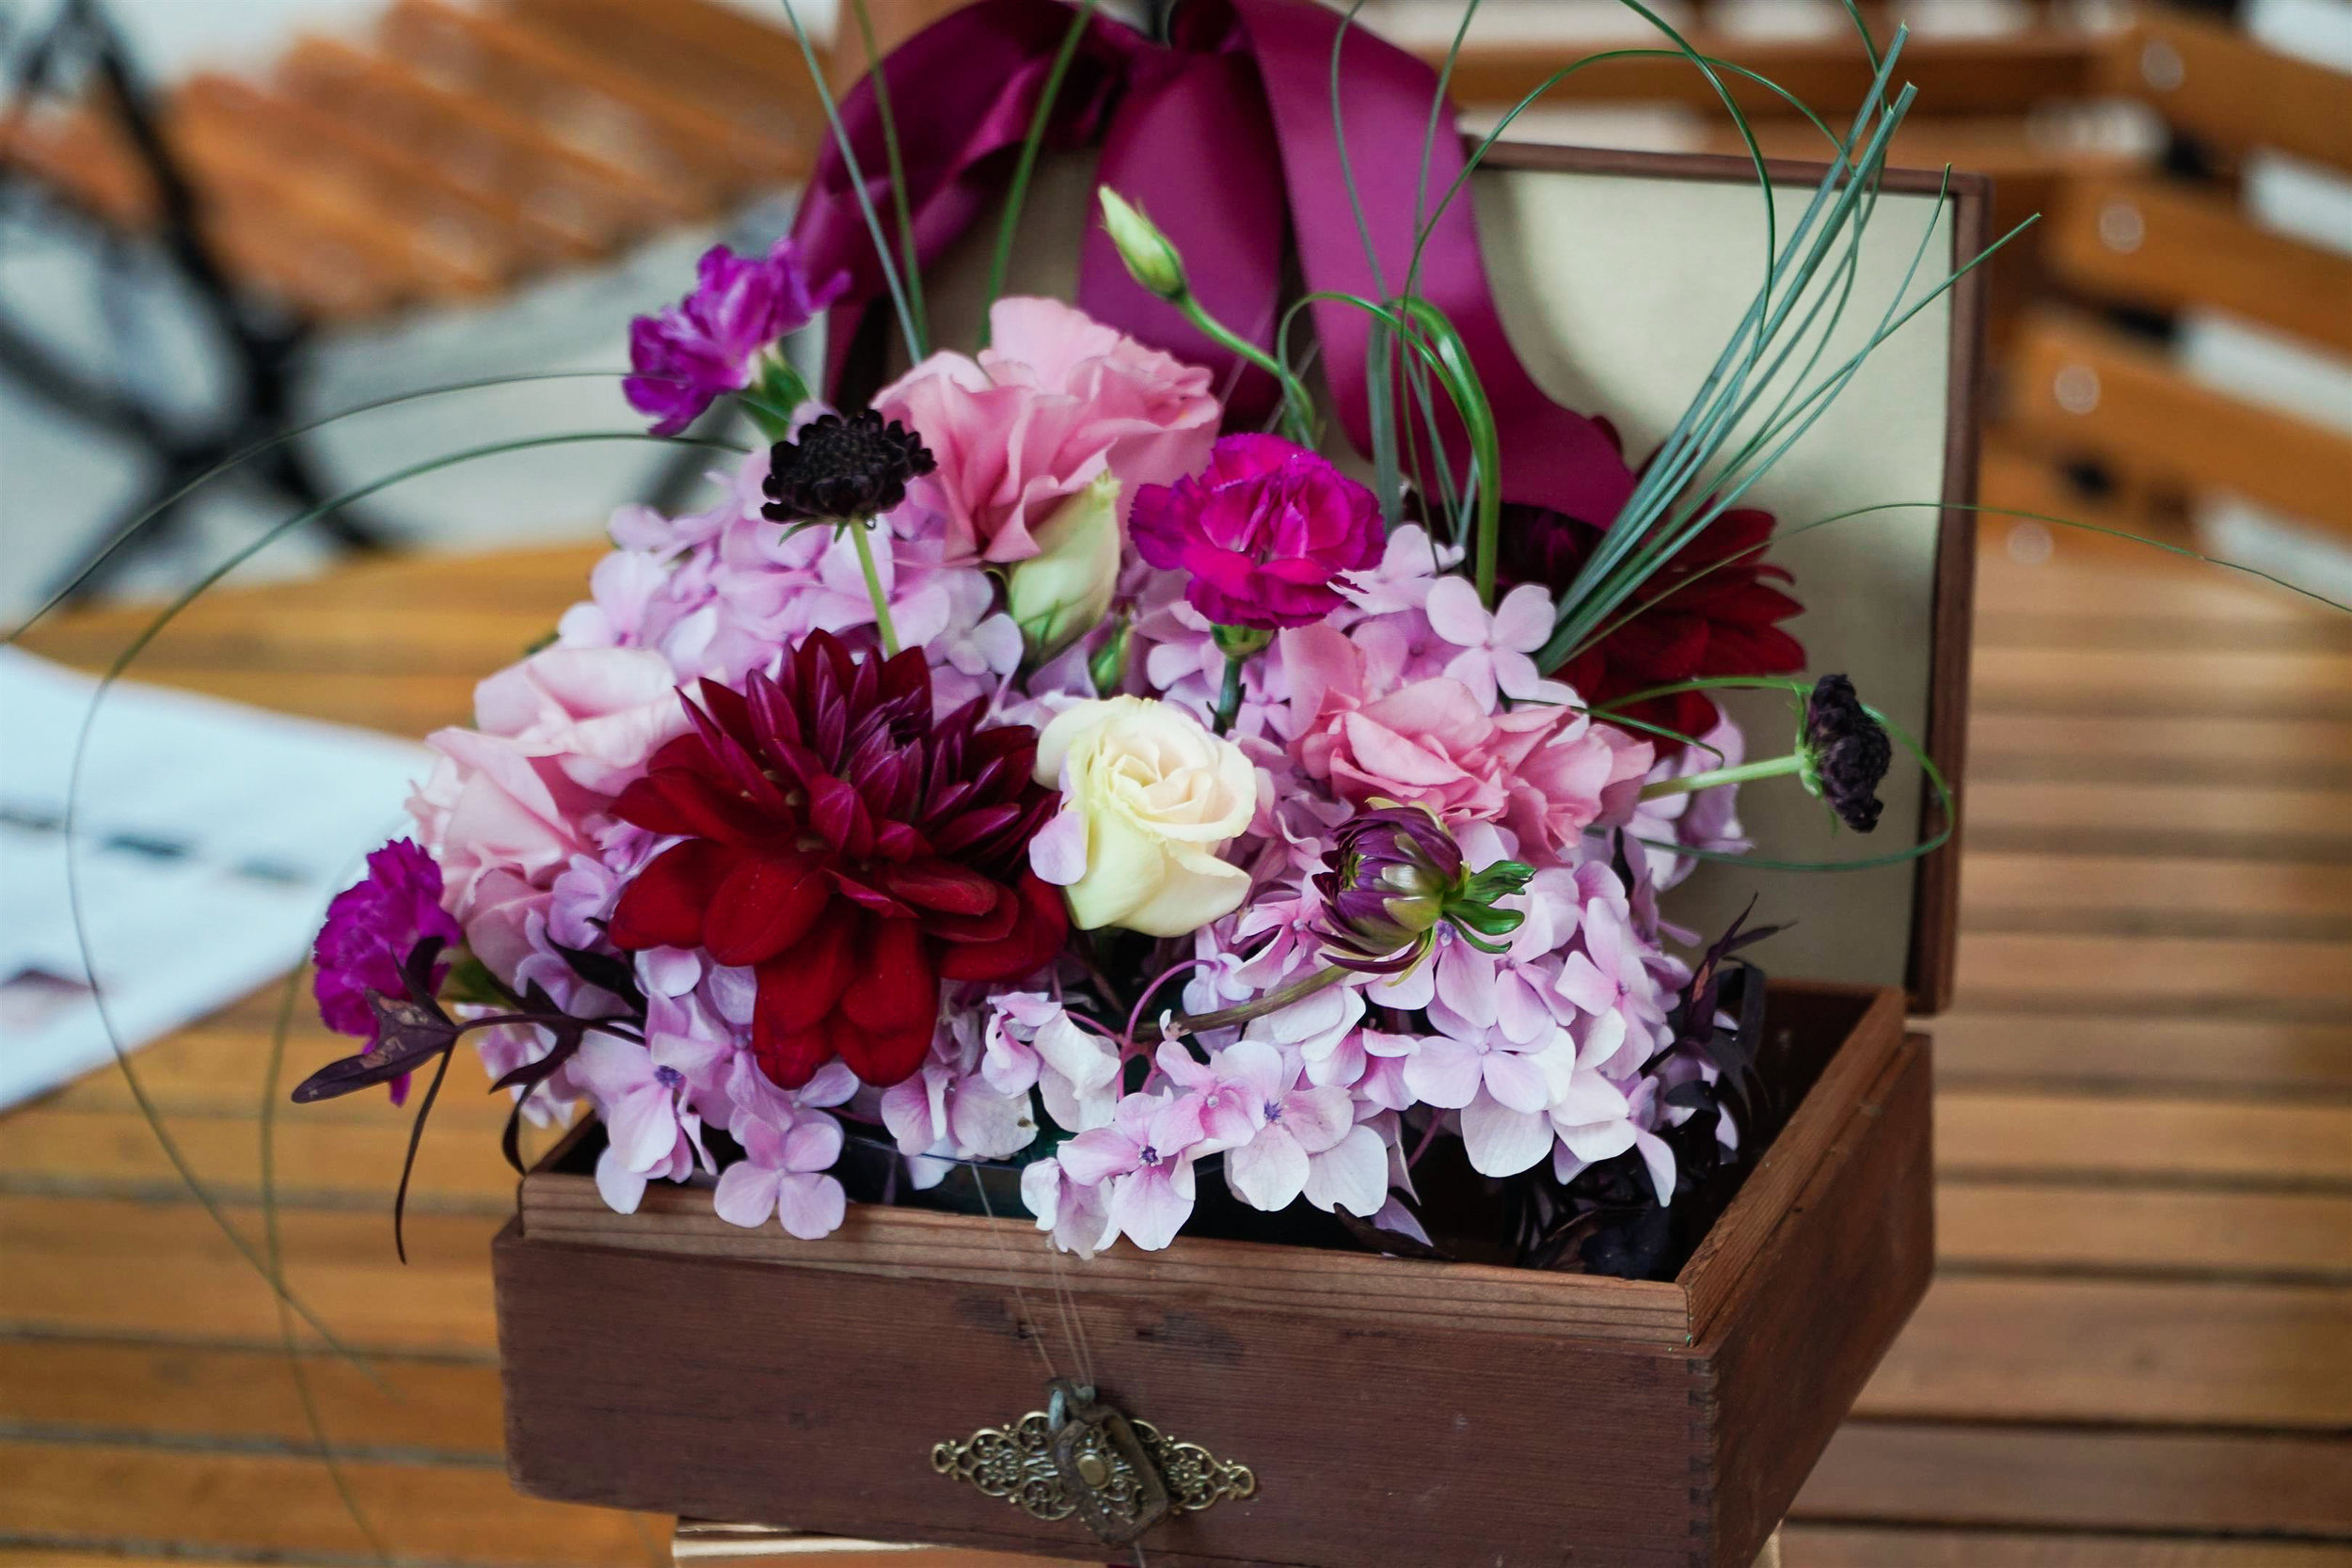 Floral arrangement in a wooden box